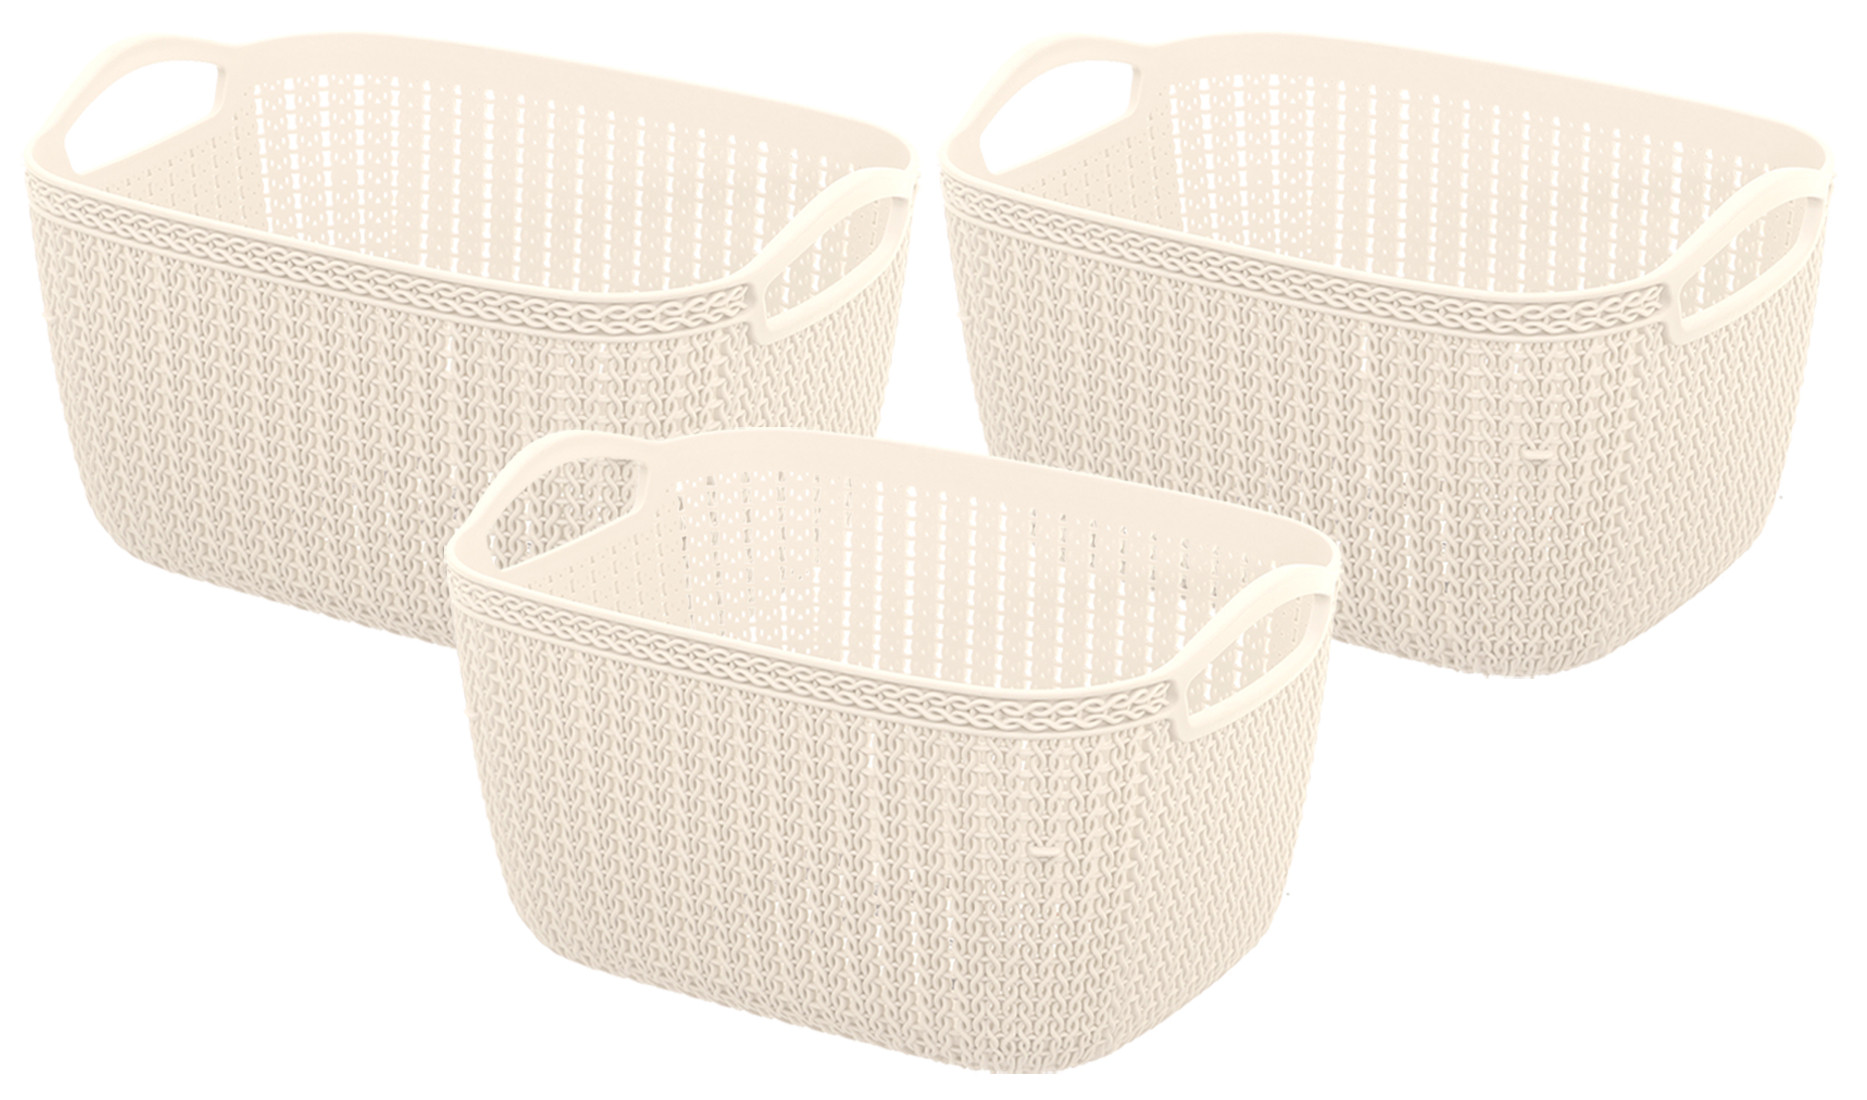 Kuber Industries Unbreakable Plastic Multipurpose Large Size Flexible Storage Baskets / Fruit Vegetable Bathroom Stationary Home Basket with Handles (Cream) -CTKTC37821